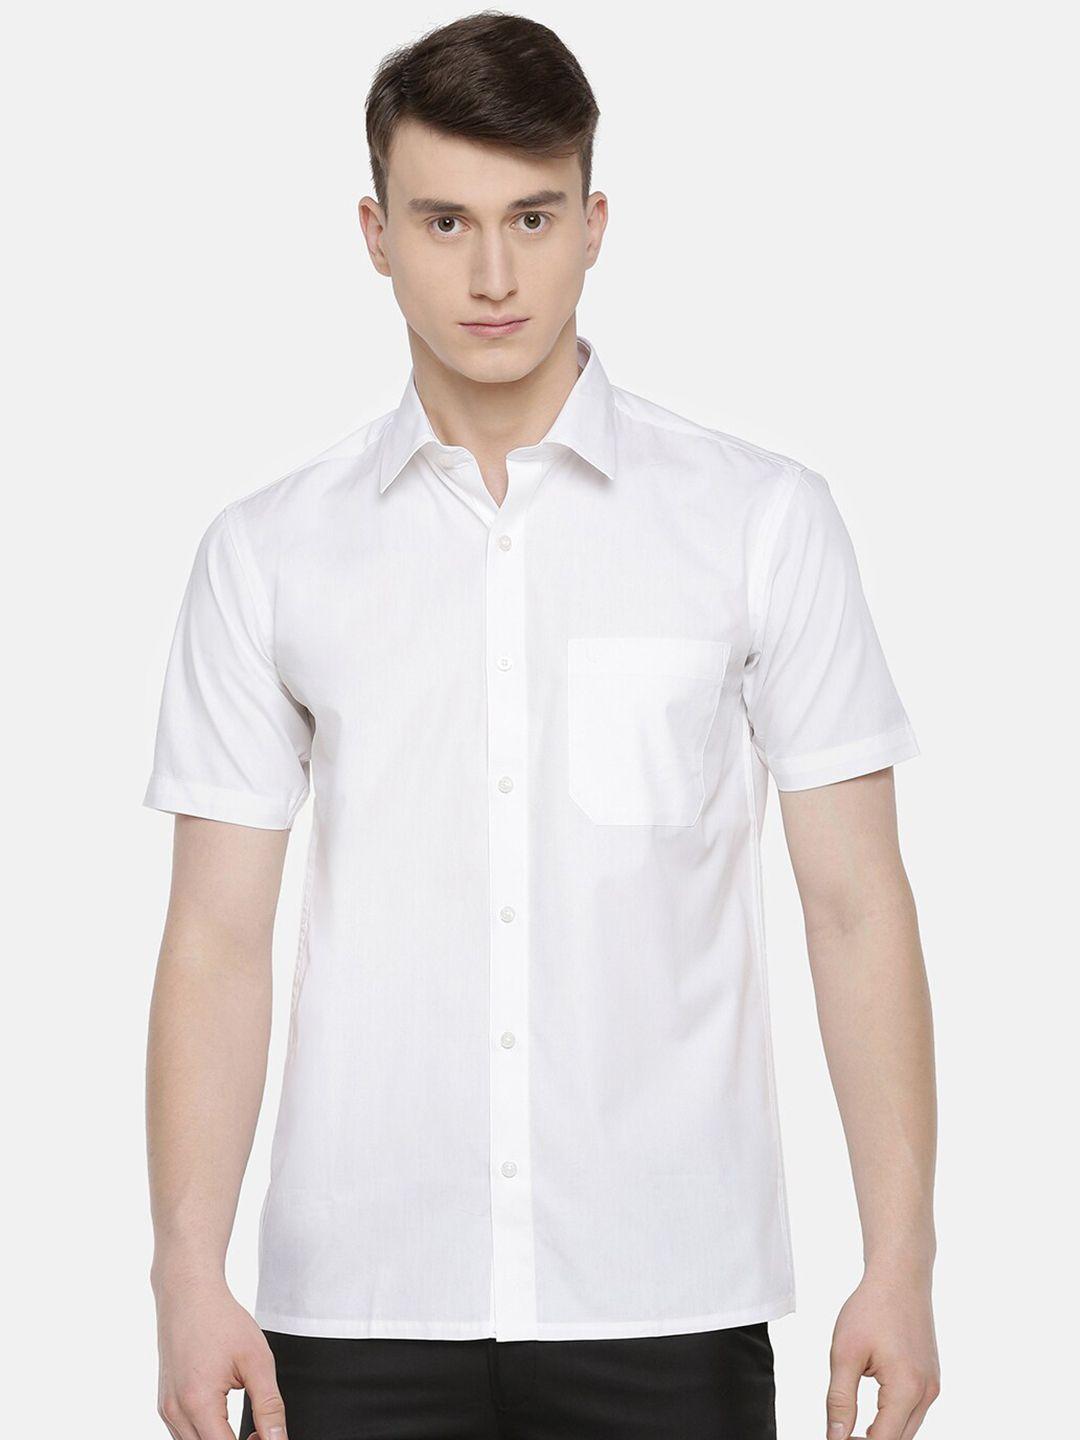 white-heart-spread-collar-pure-cotton-casual-shirt